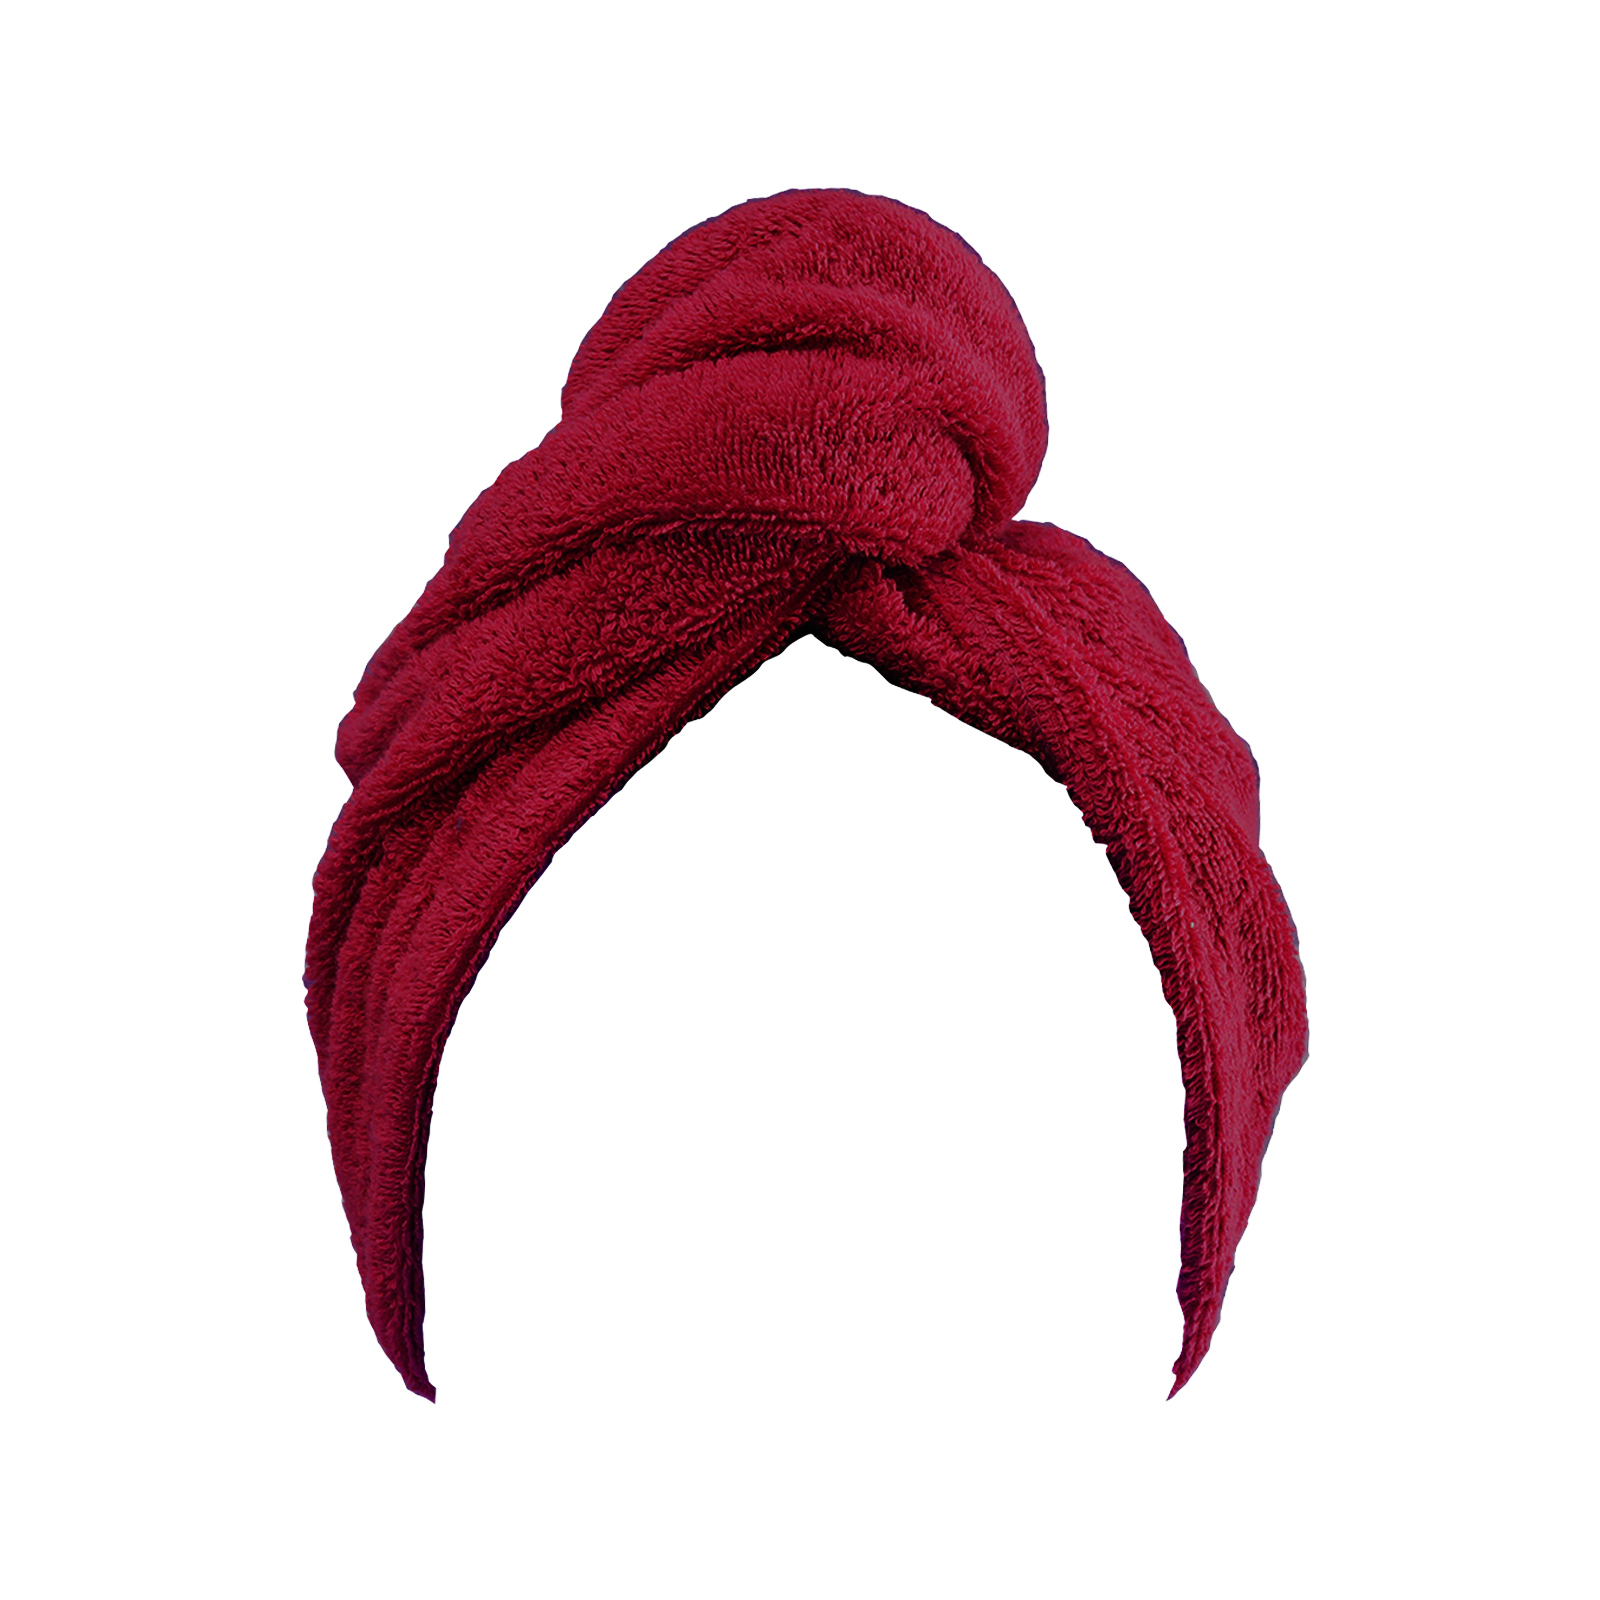 Turban Haarturban Kopfhandtuch Haartrockentuch Handtuch Haarpflege Rose Rot 